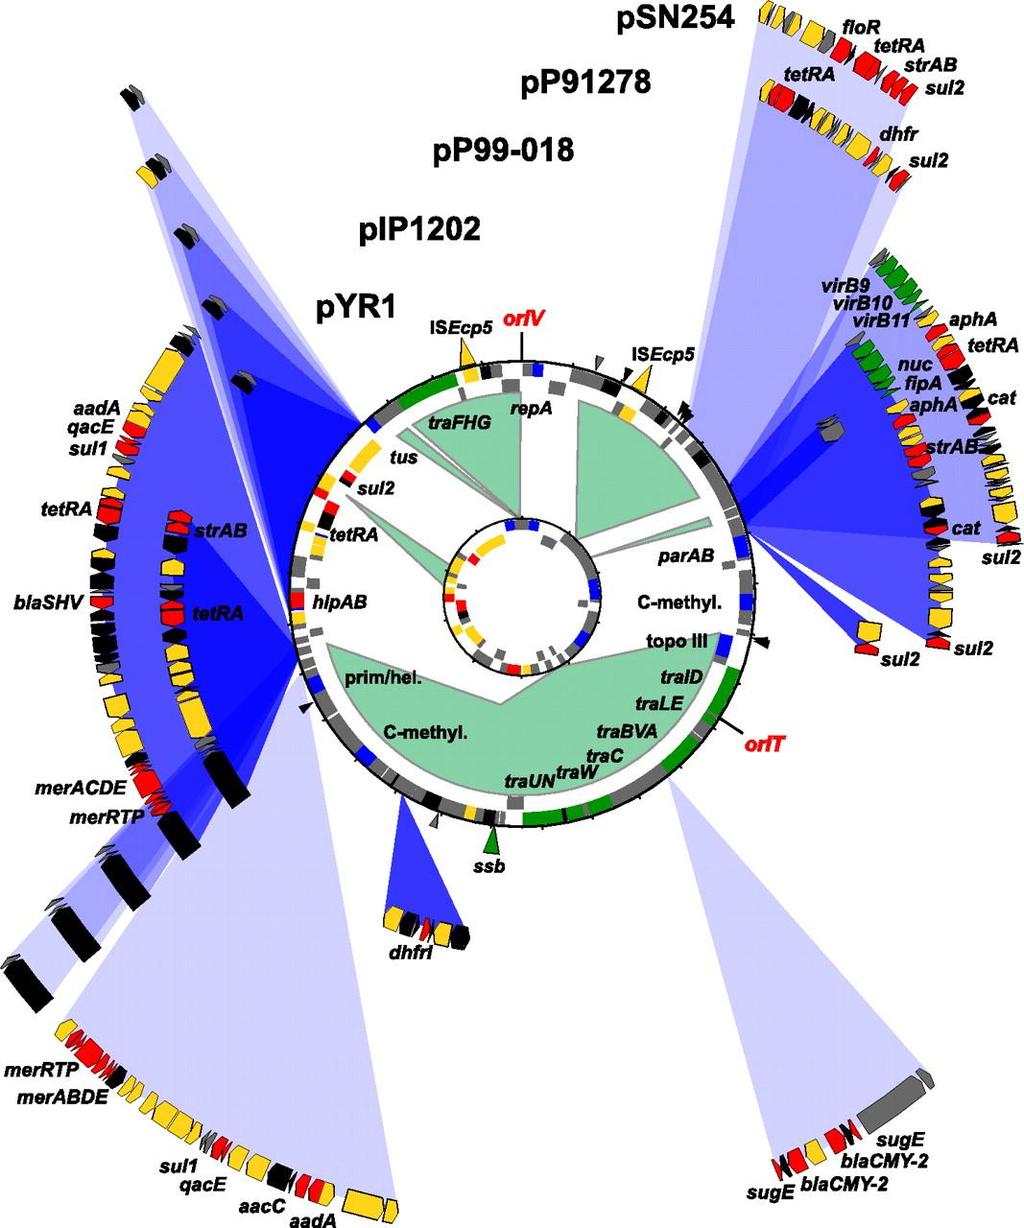 Broad Host Range IncA/C Multidrug Resistance Plasmid Photobacterium Salmonella Genes for horizontal transfer.